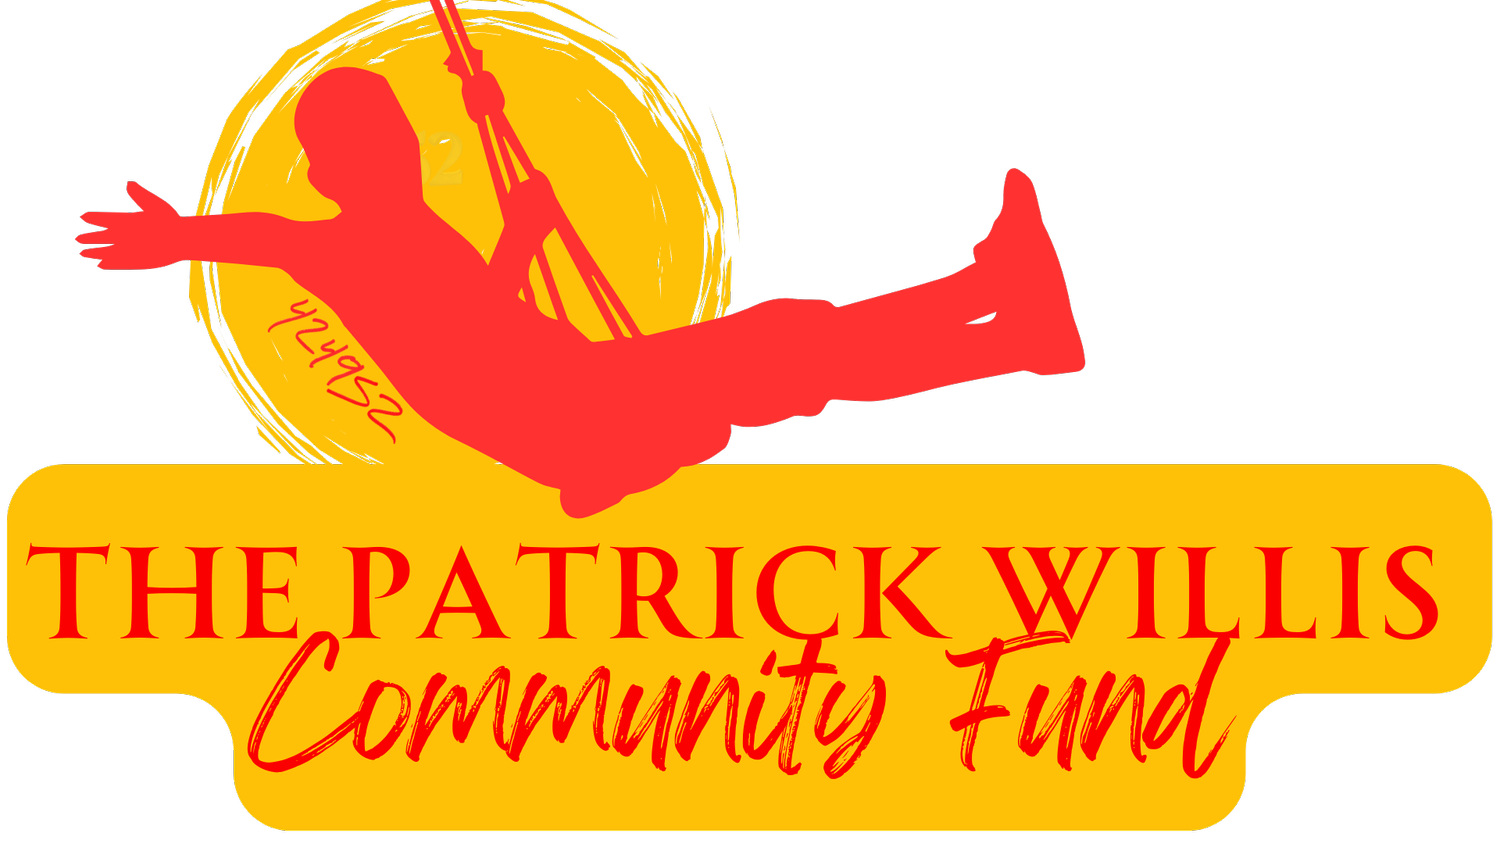 The Patrick Willis Community Fund